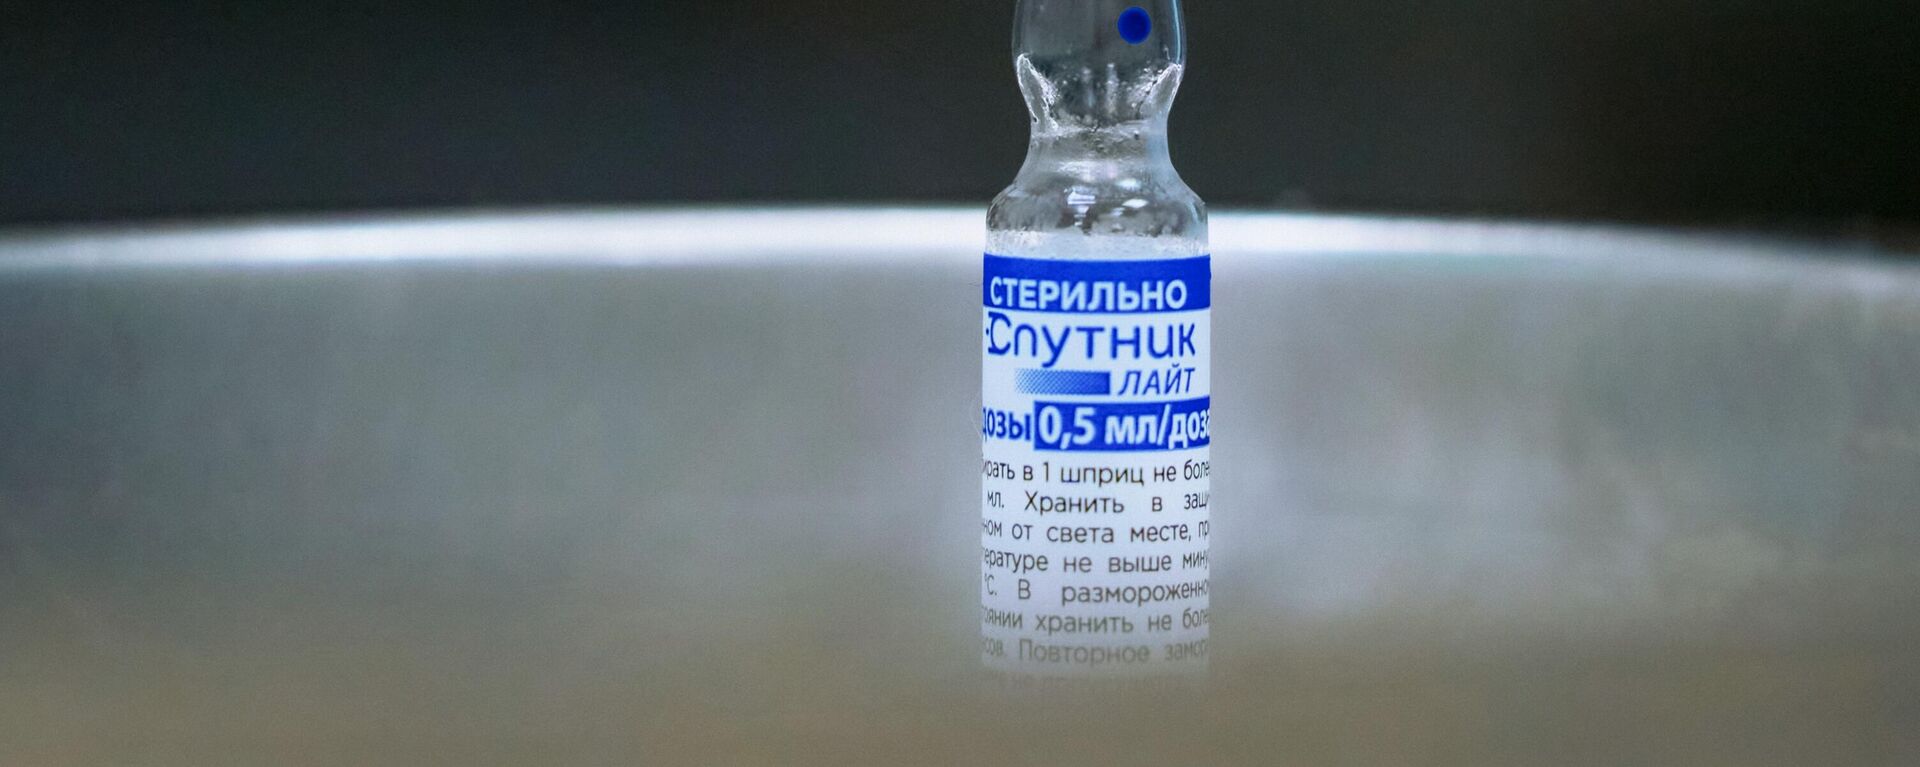 Vacuna monodosis rusa Sputnik Light - Sputnik Mundo, 1920, 24.09.2021